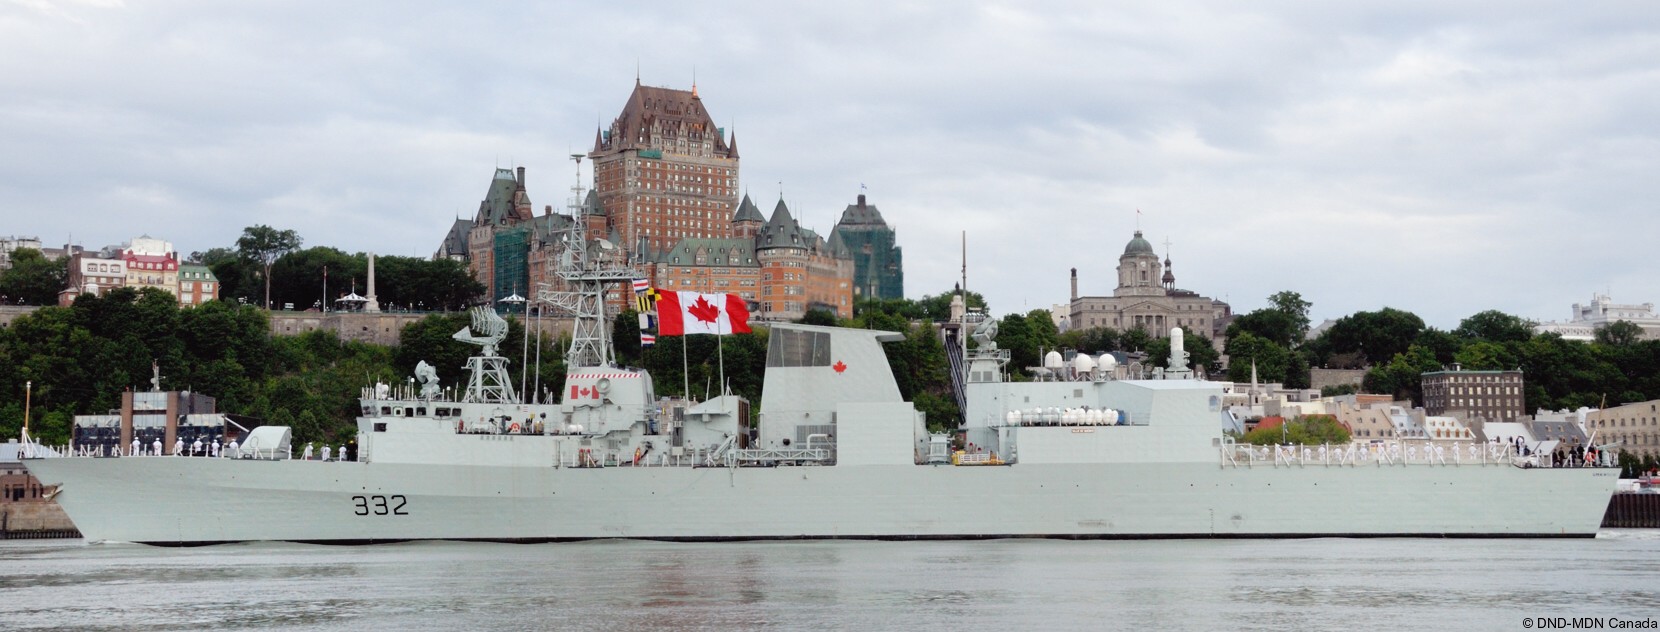 ffh-332 hmcs ville de quebec halifax class helicopter patrol frigate ncsm royal canadian navy 17